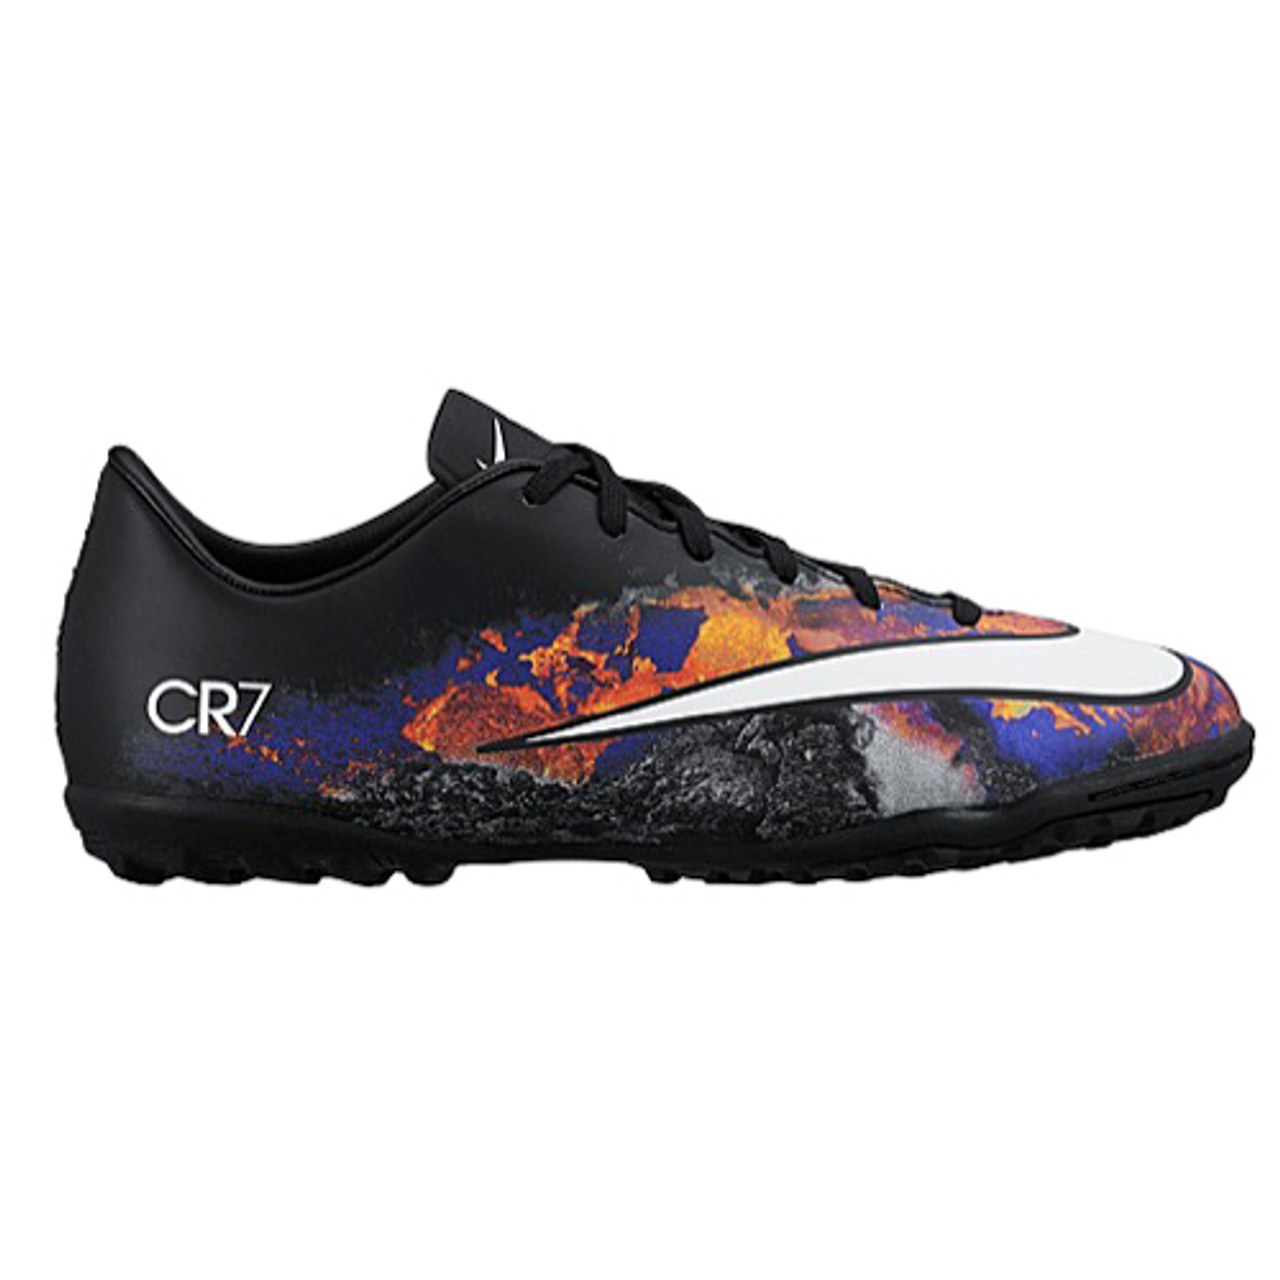 cr7 turf shoes